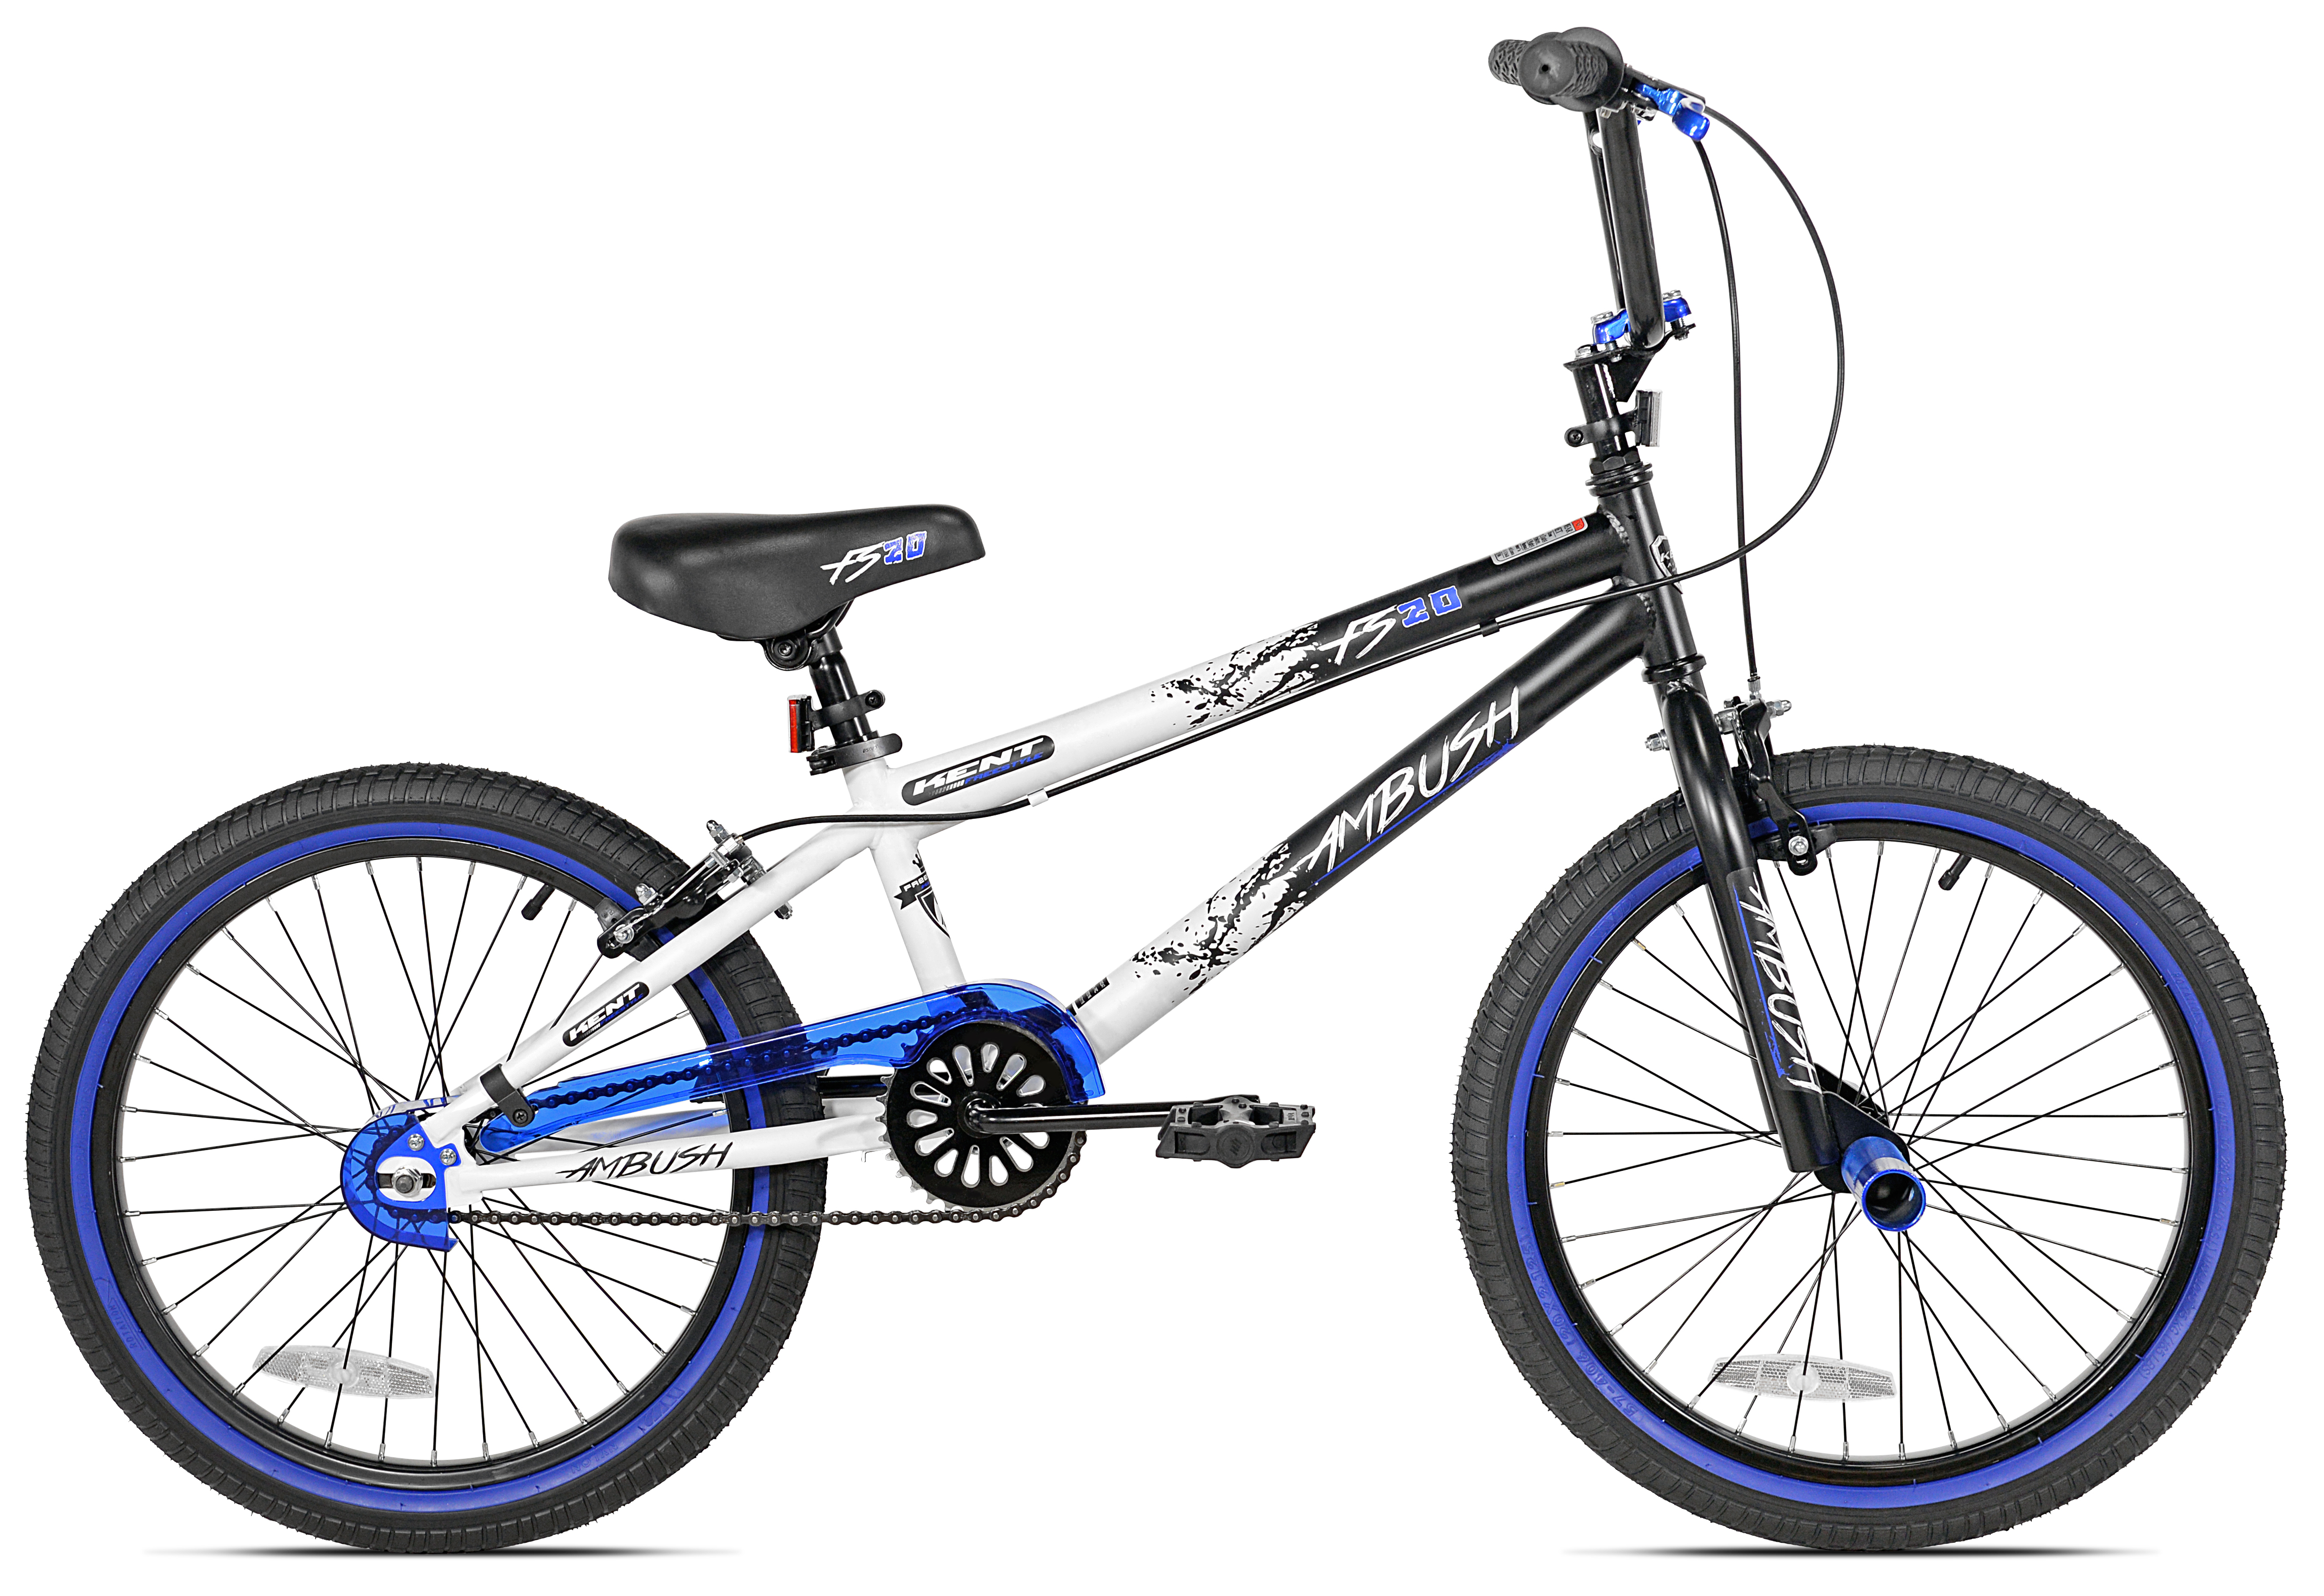 Kent Bicycles 20" Boy's Ambush BMX Child Bike, Black/Blue - image 3 of 13